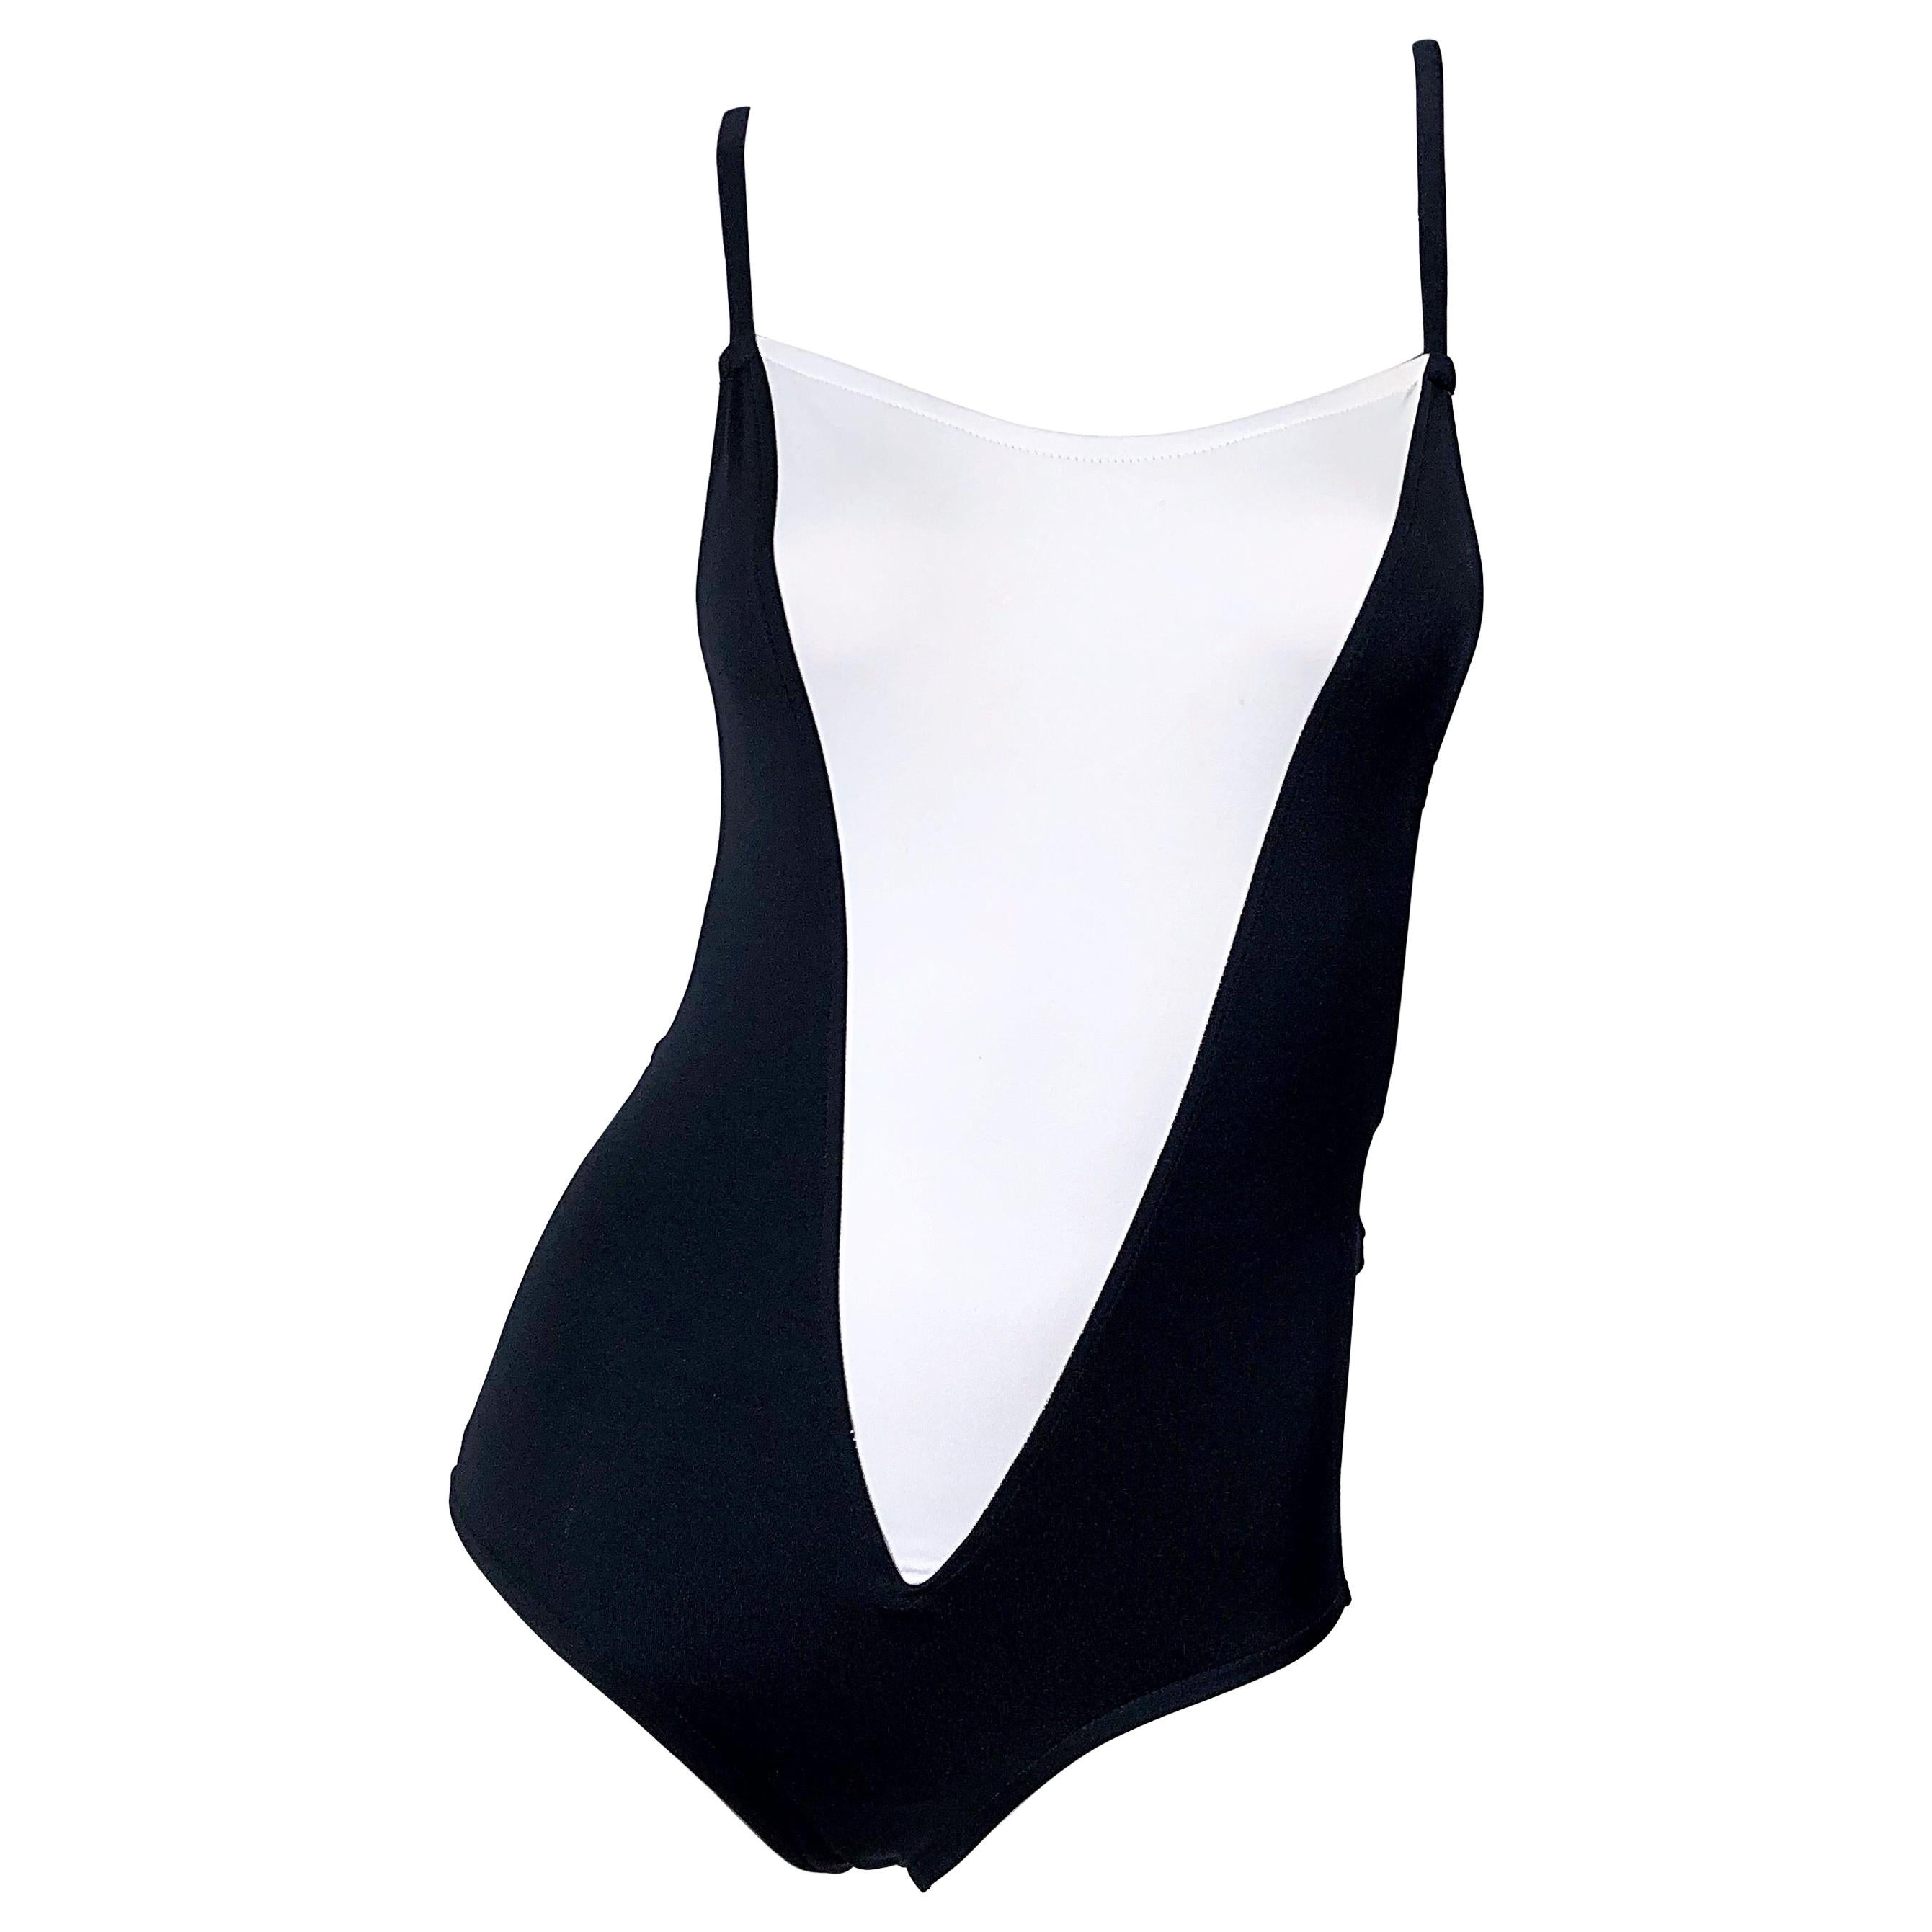 NWT Bill Blass 1980s Sz 8 Trompe l'oeil Black and White 80s Swimsuit Bodysuit